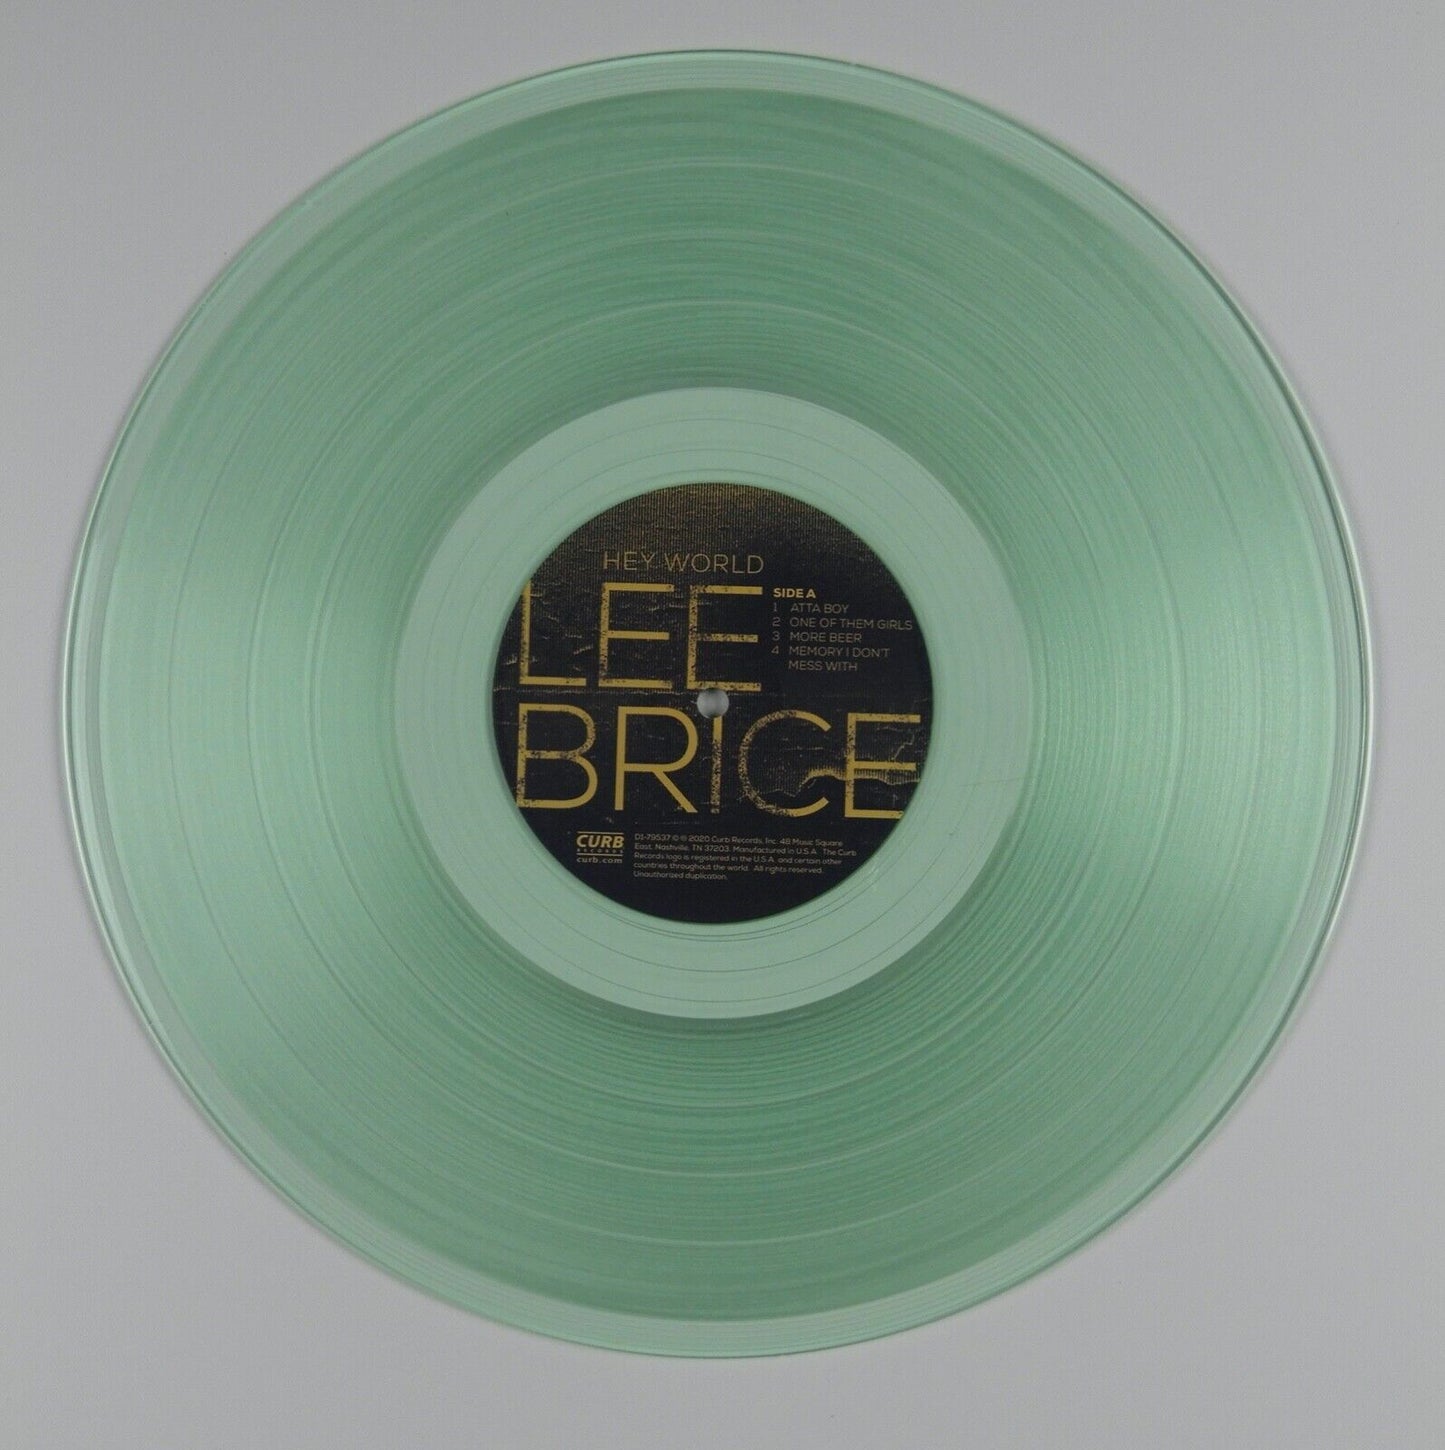 Lee Brice Signed JSA Signed Autograph Album Record LP Green Vinyl Hey World